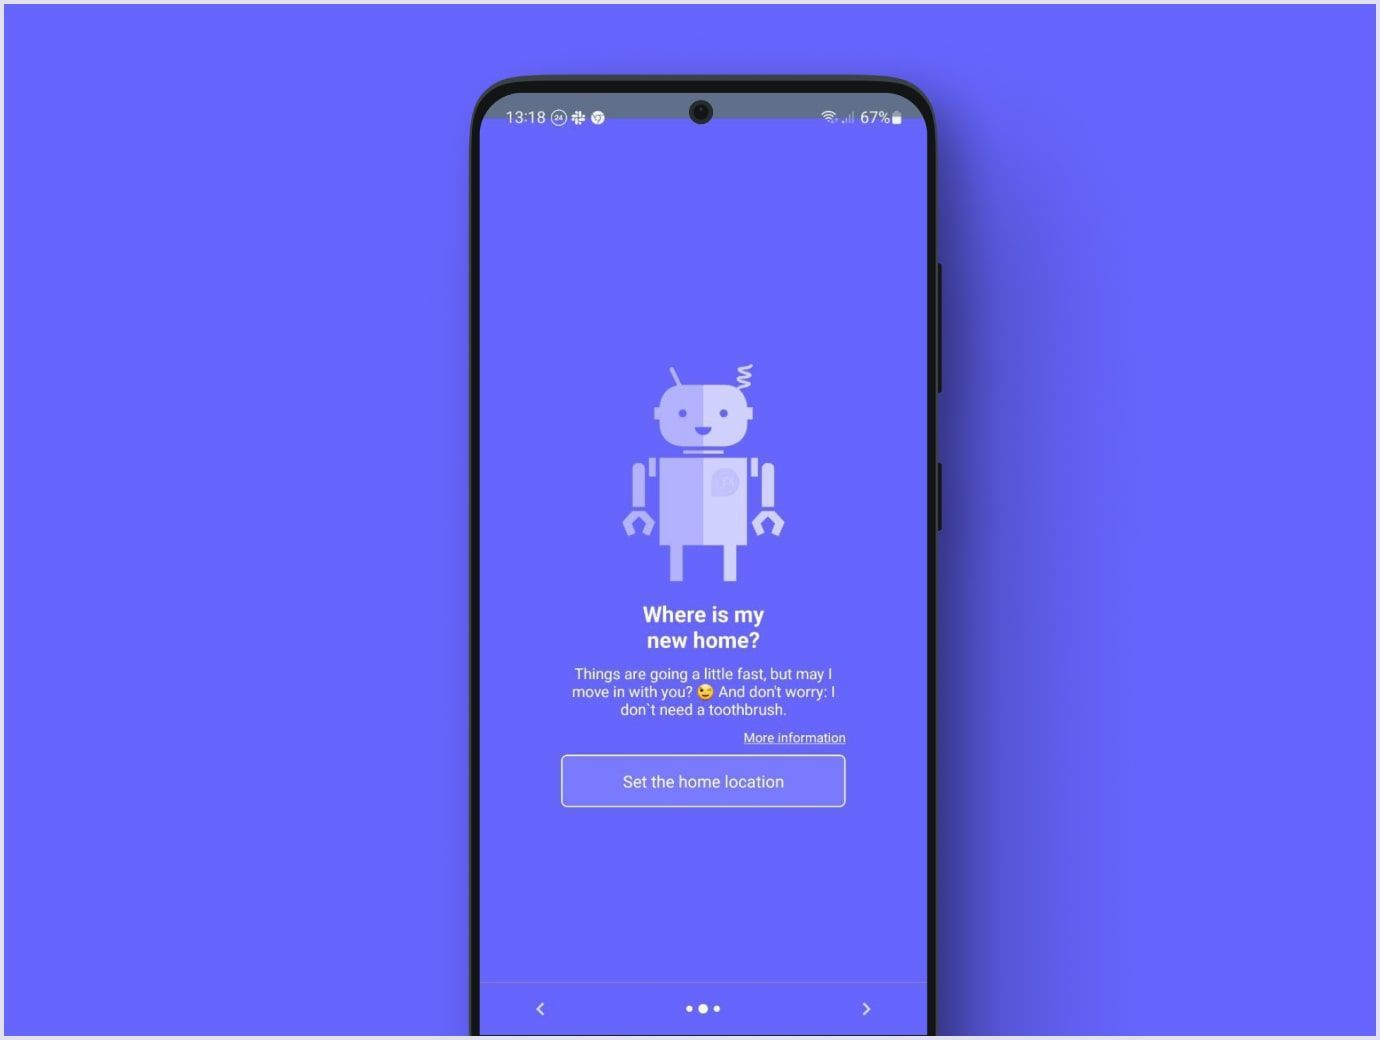 App message for asking user's location in mental health app design